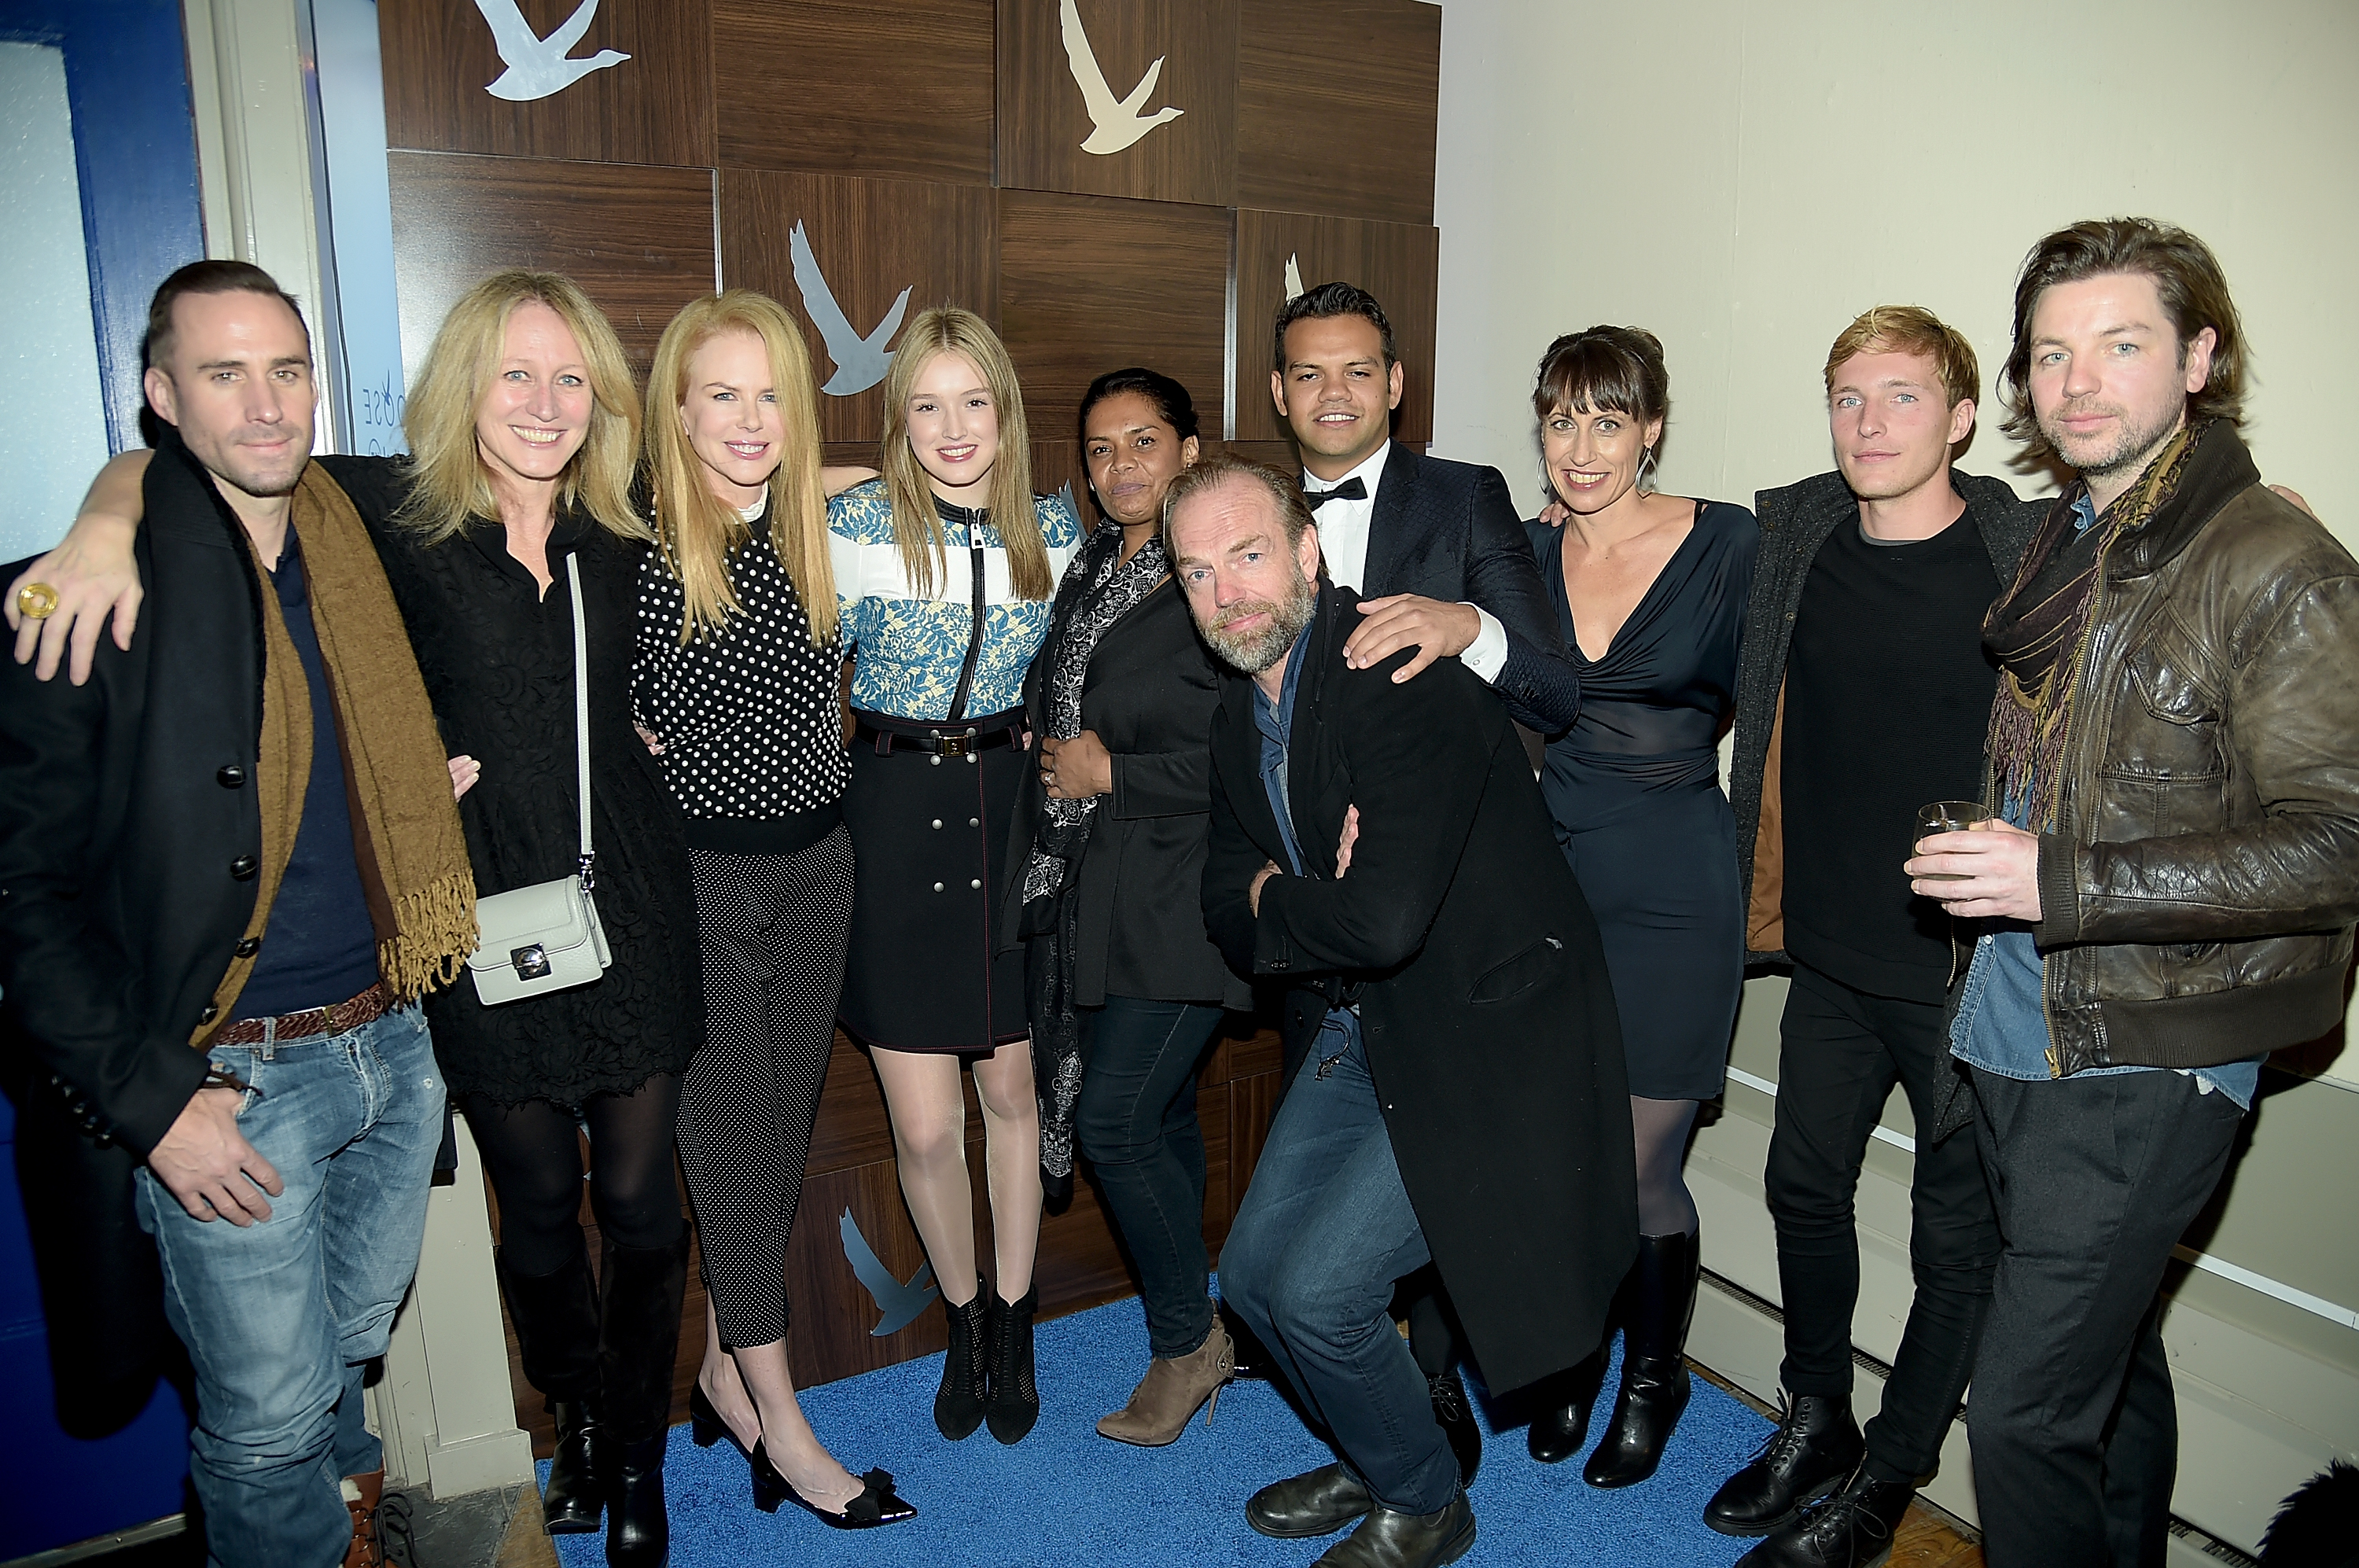 Cast and crew of "Strangerland" attend GREY GOOSE Blue Door Hosts "Strangerland" Party at Sundance